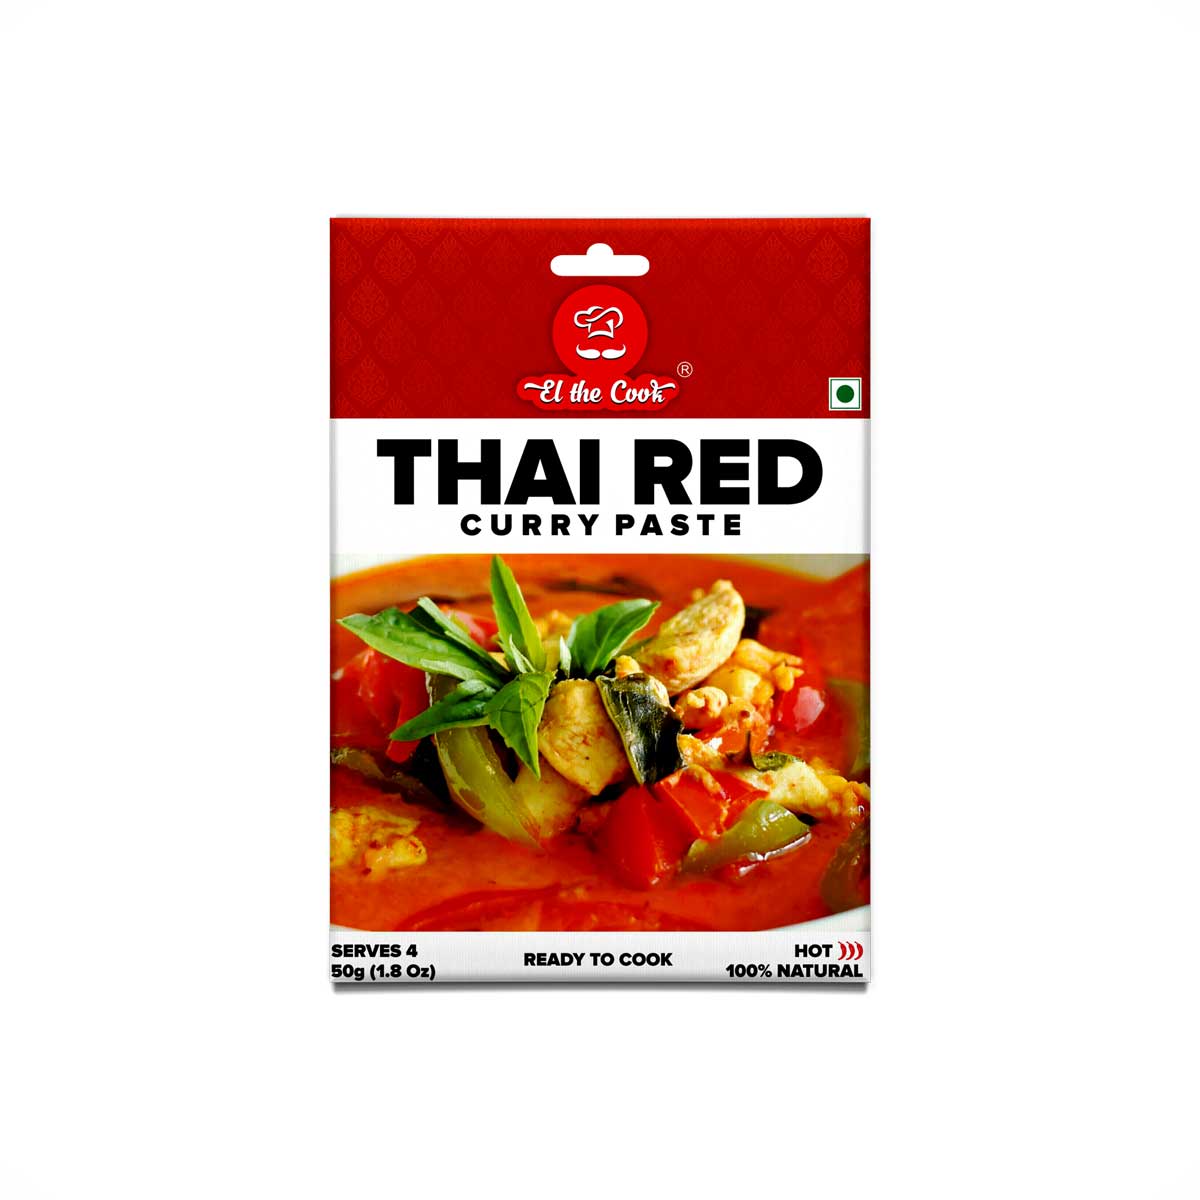 Khao Suey Kit + Thai Curry Kit | Super Saver Pack